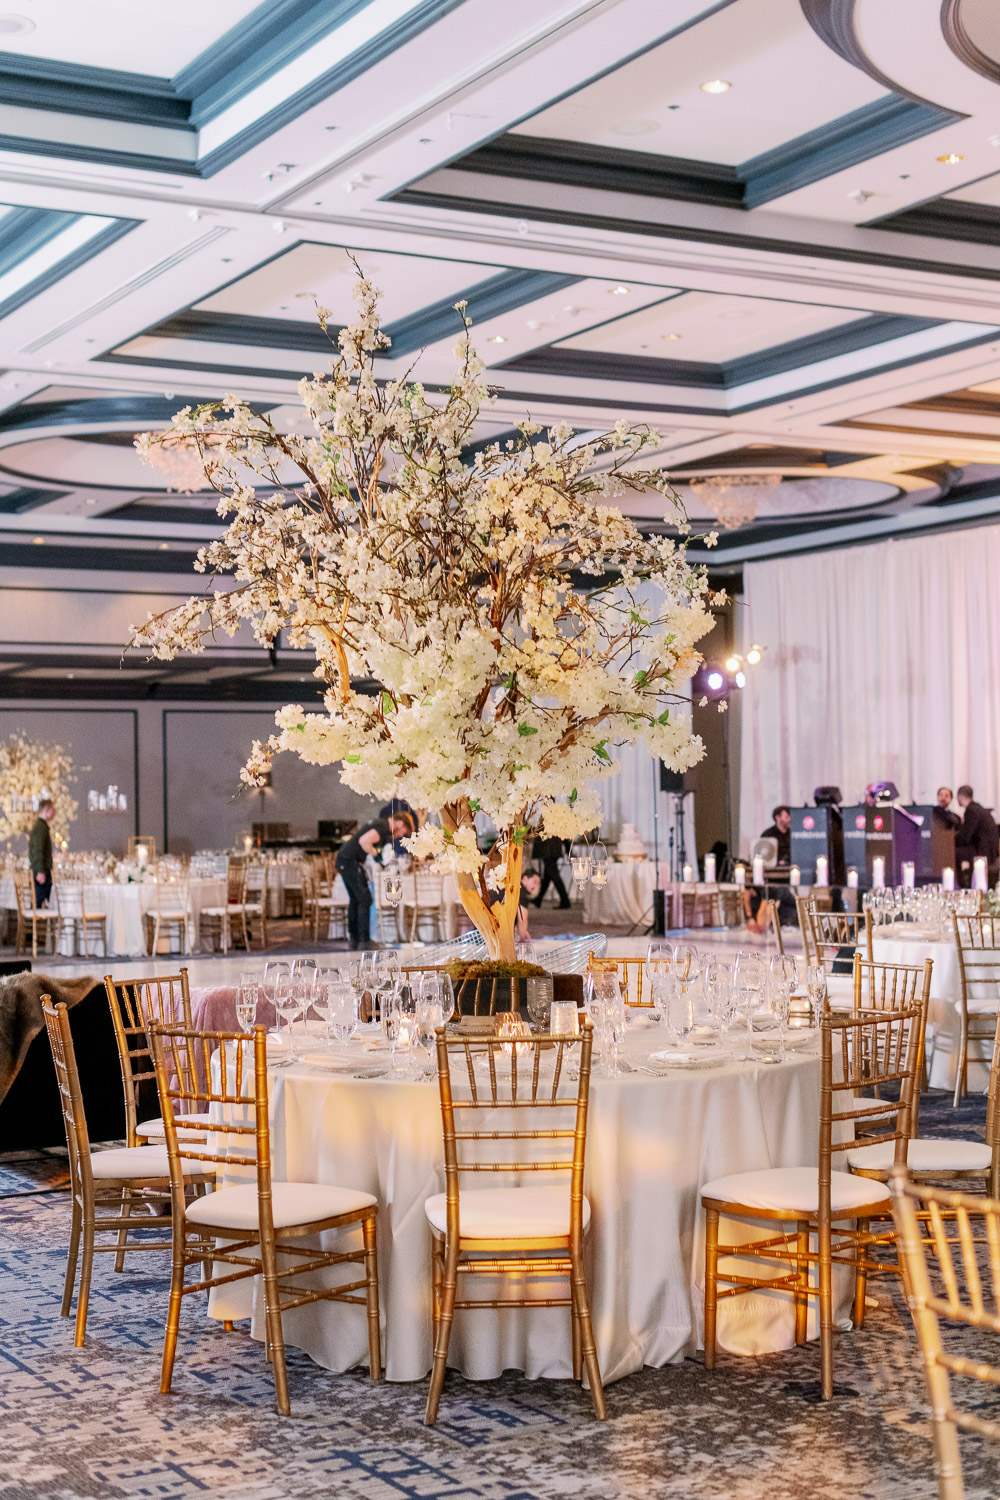 Kehoe Designs — Chicago Event Wedding Designer + Florist